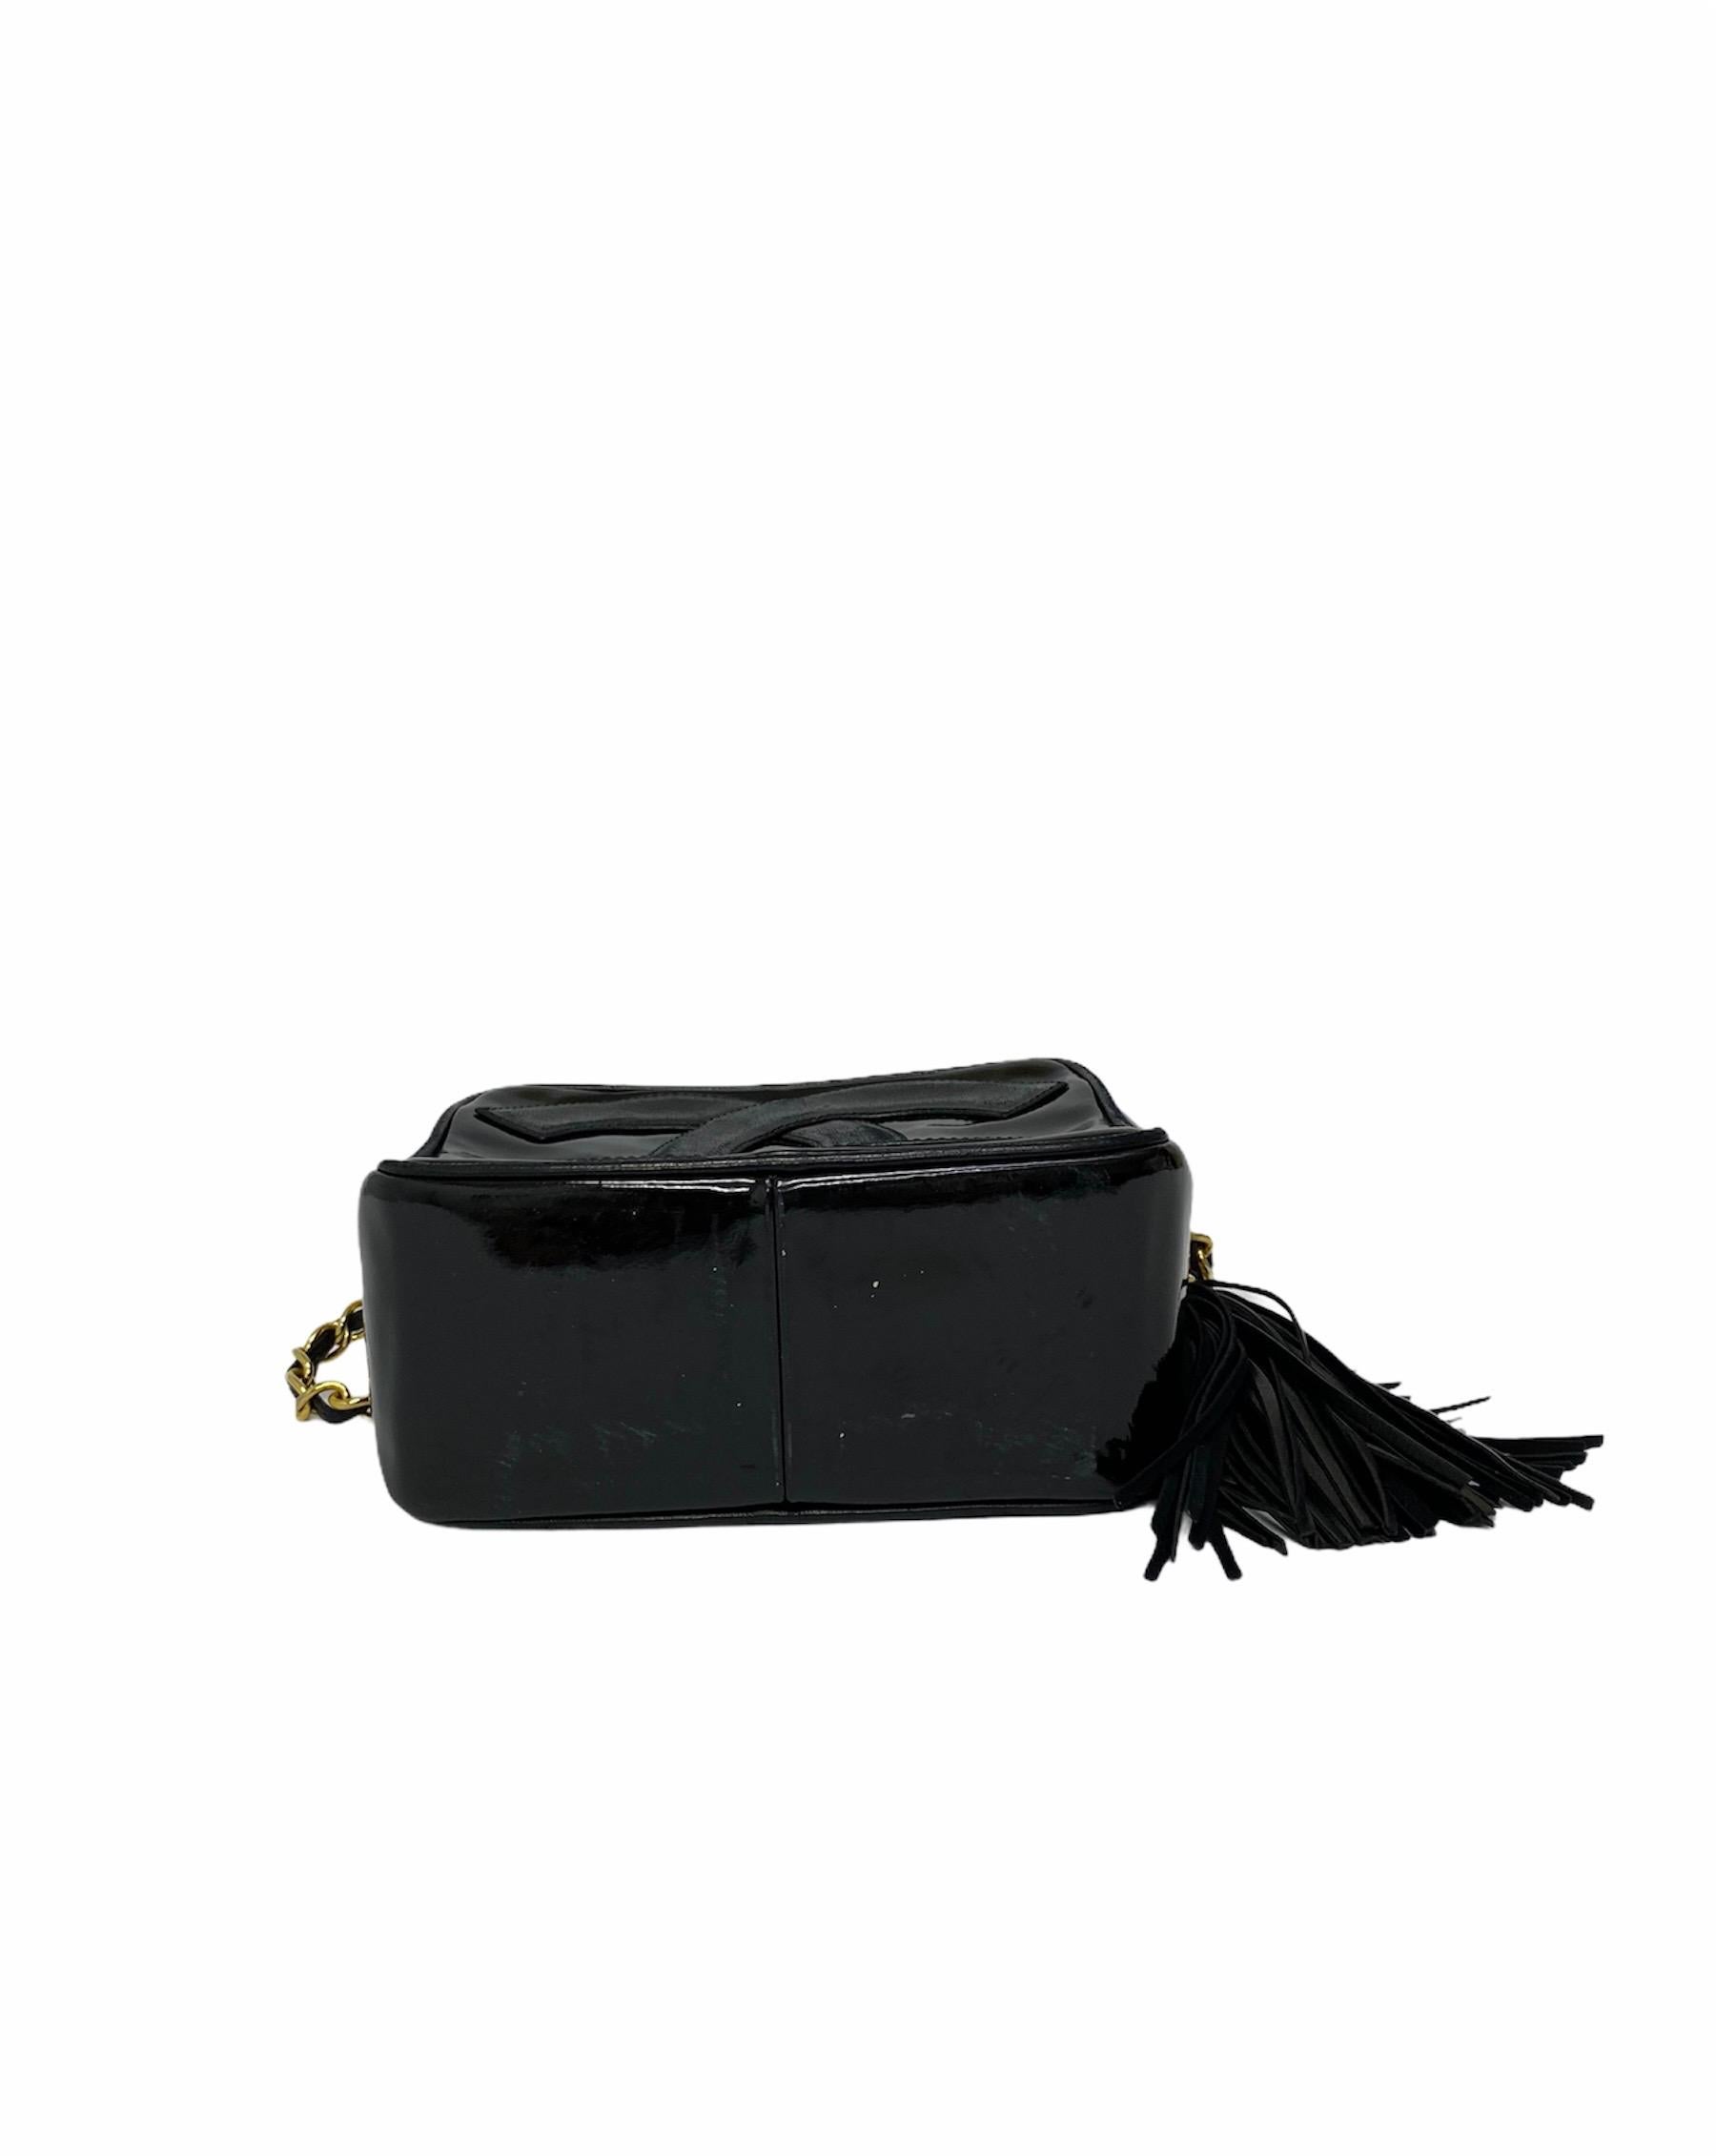 black chanel camera bag